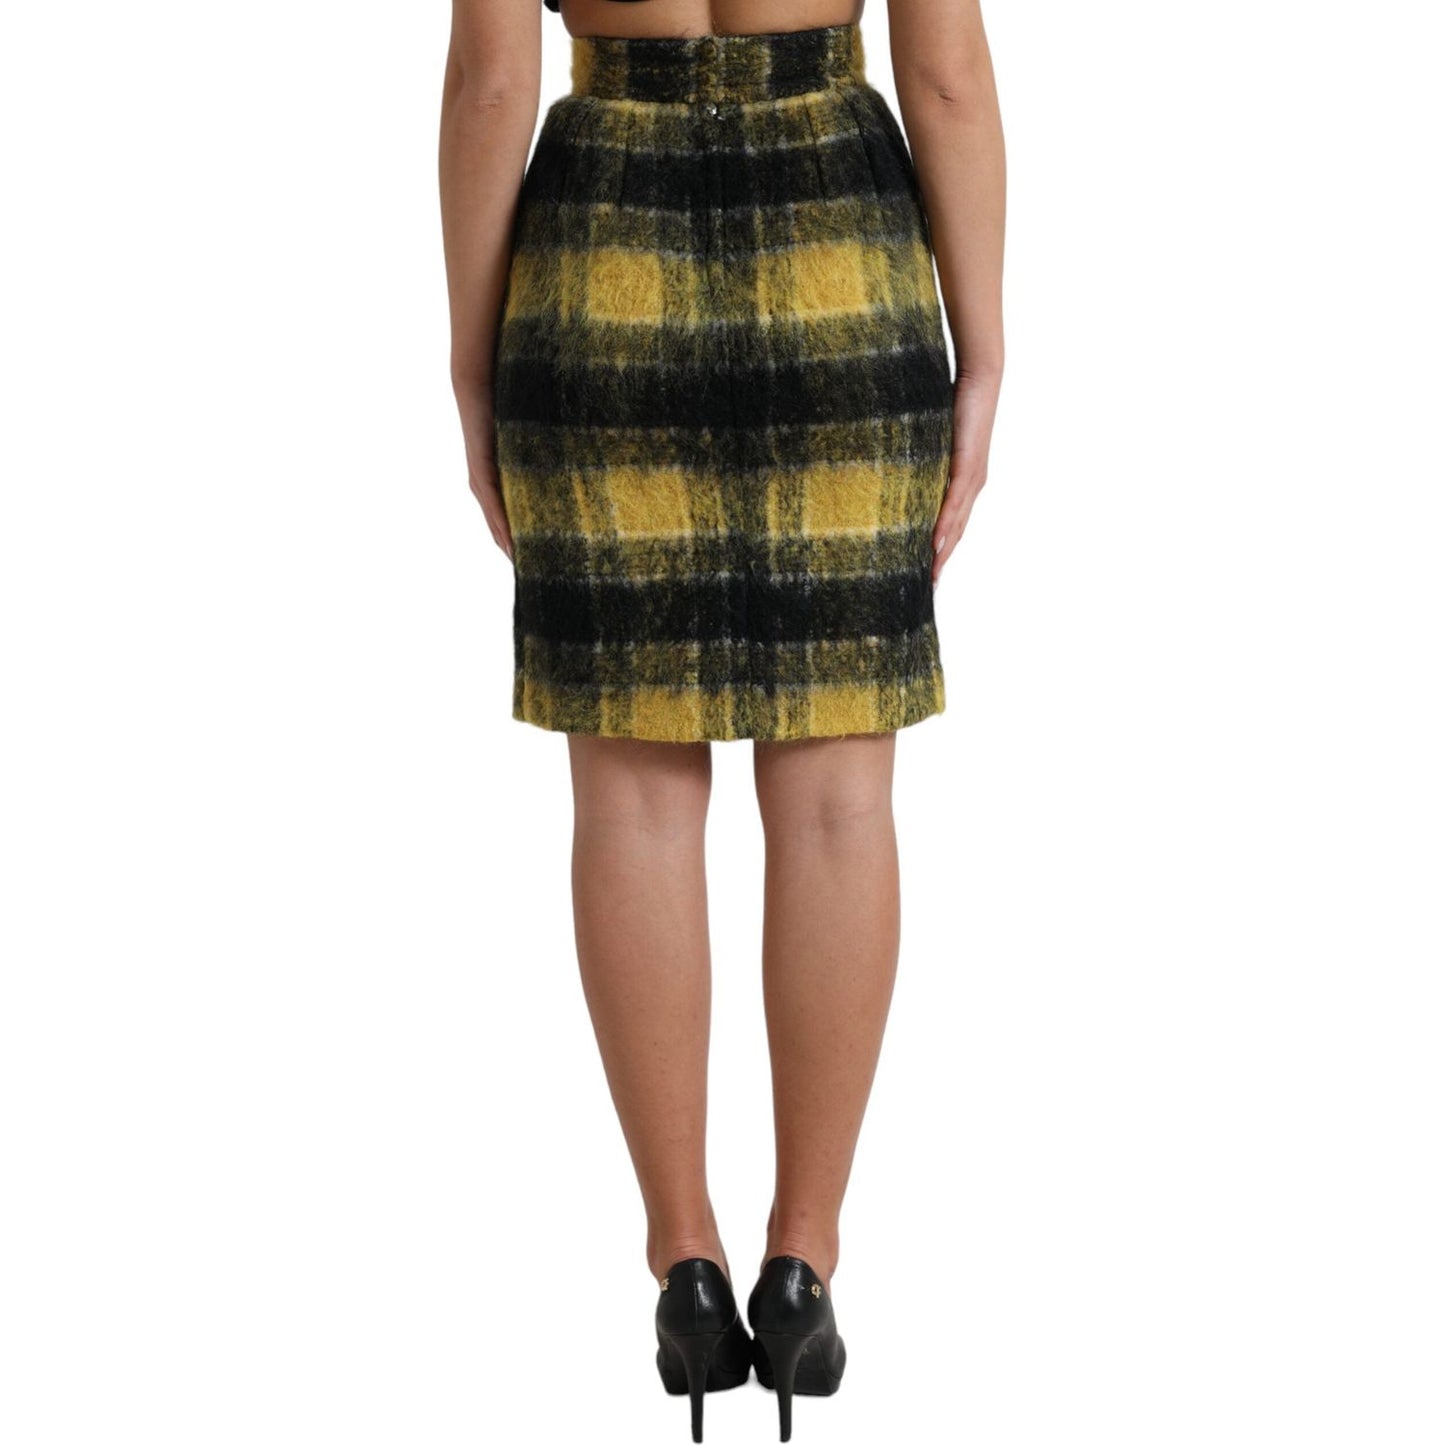 Dolce & Gabbana High Waist Check Print Silk-Lined Mini Skirt yellow-black-brushed-checked-wool-pencil-cut-skirt 465A1850-BG-scaled-76f9adb3-e11.jpg